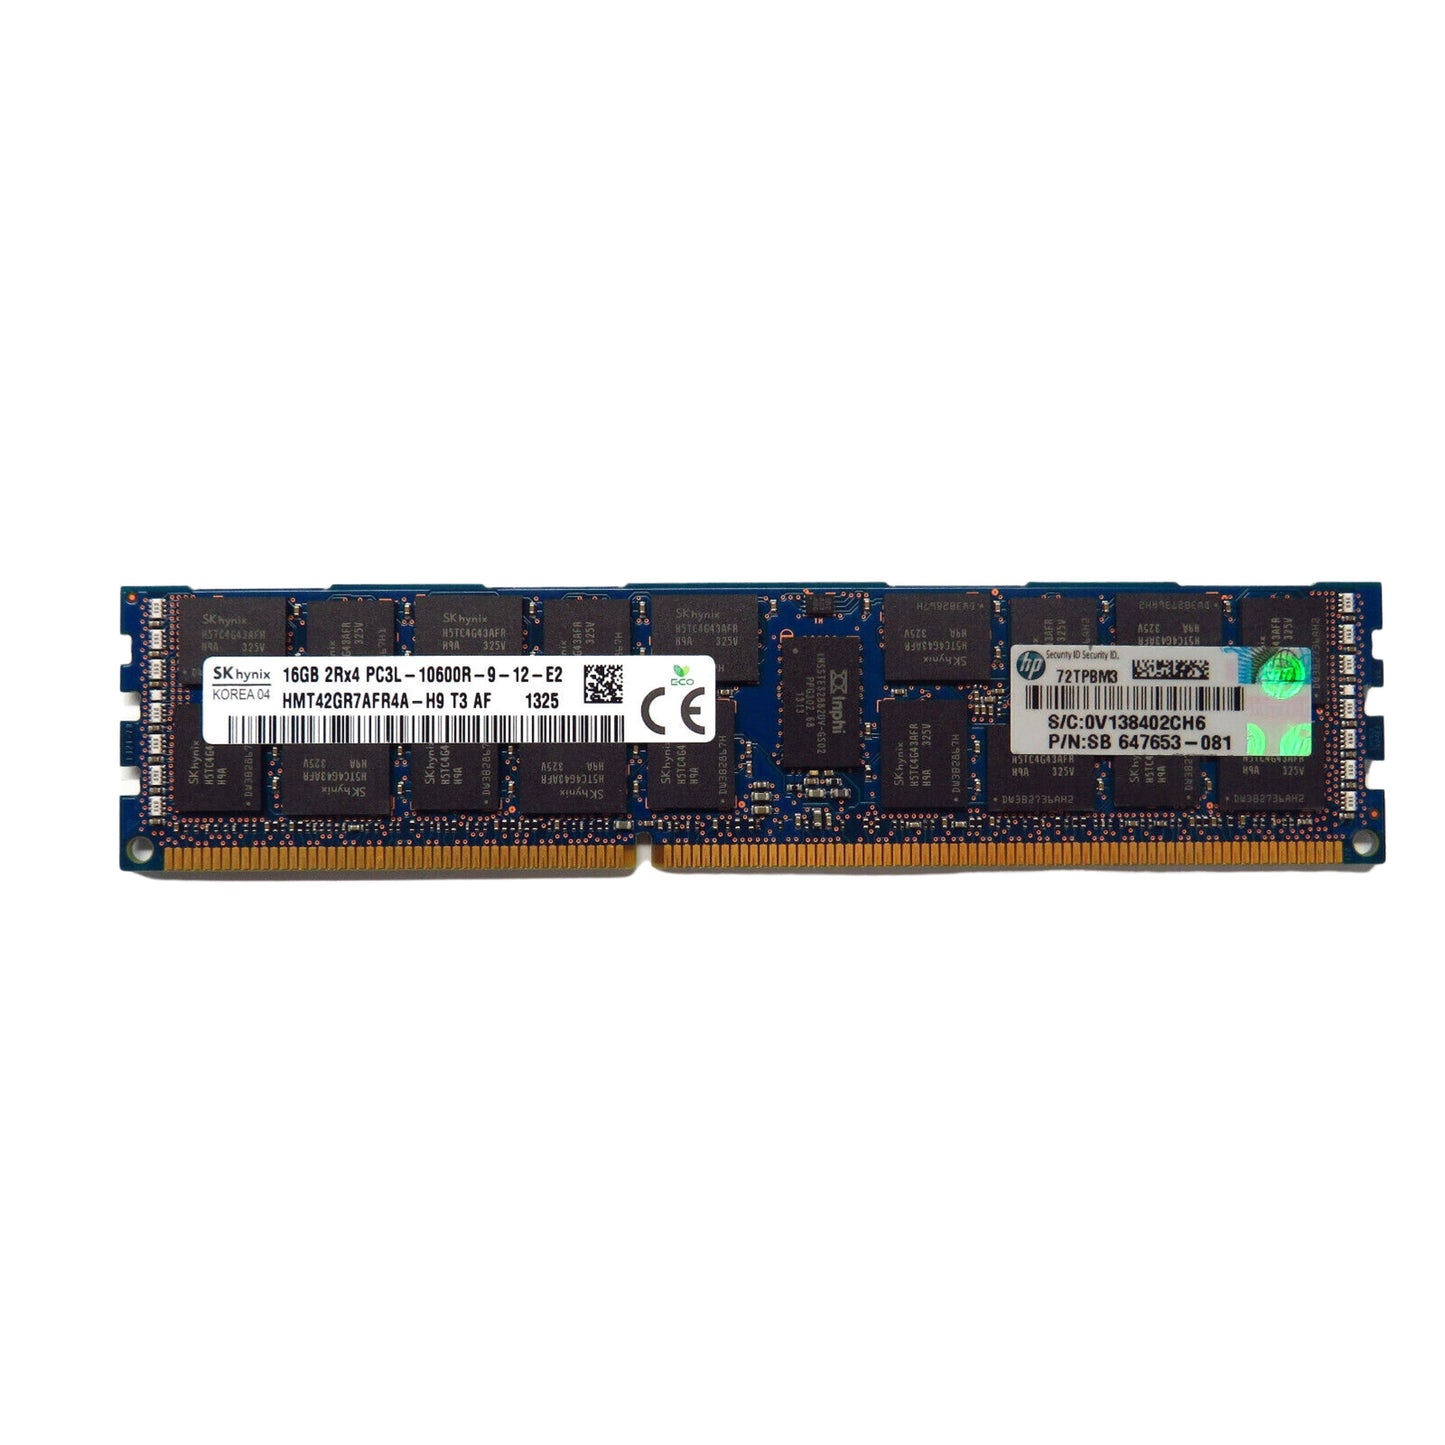 HP 647653-081 16GB 2Rx4 PC3L-10600R 1333MHz ECC DDR3 RDIMM Server Memory (Refurbished)